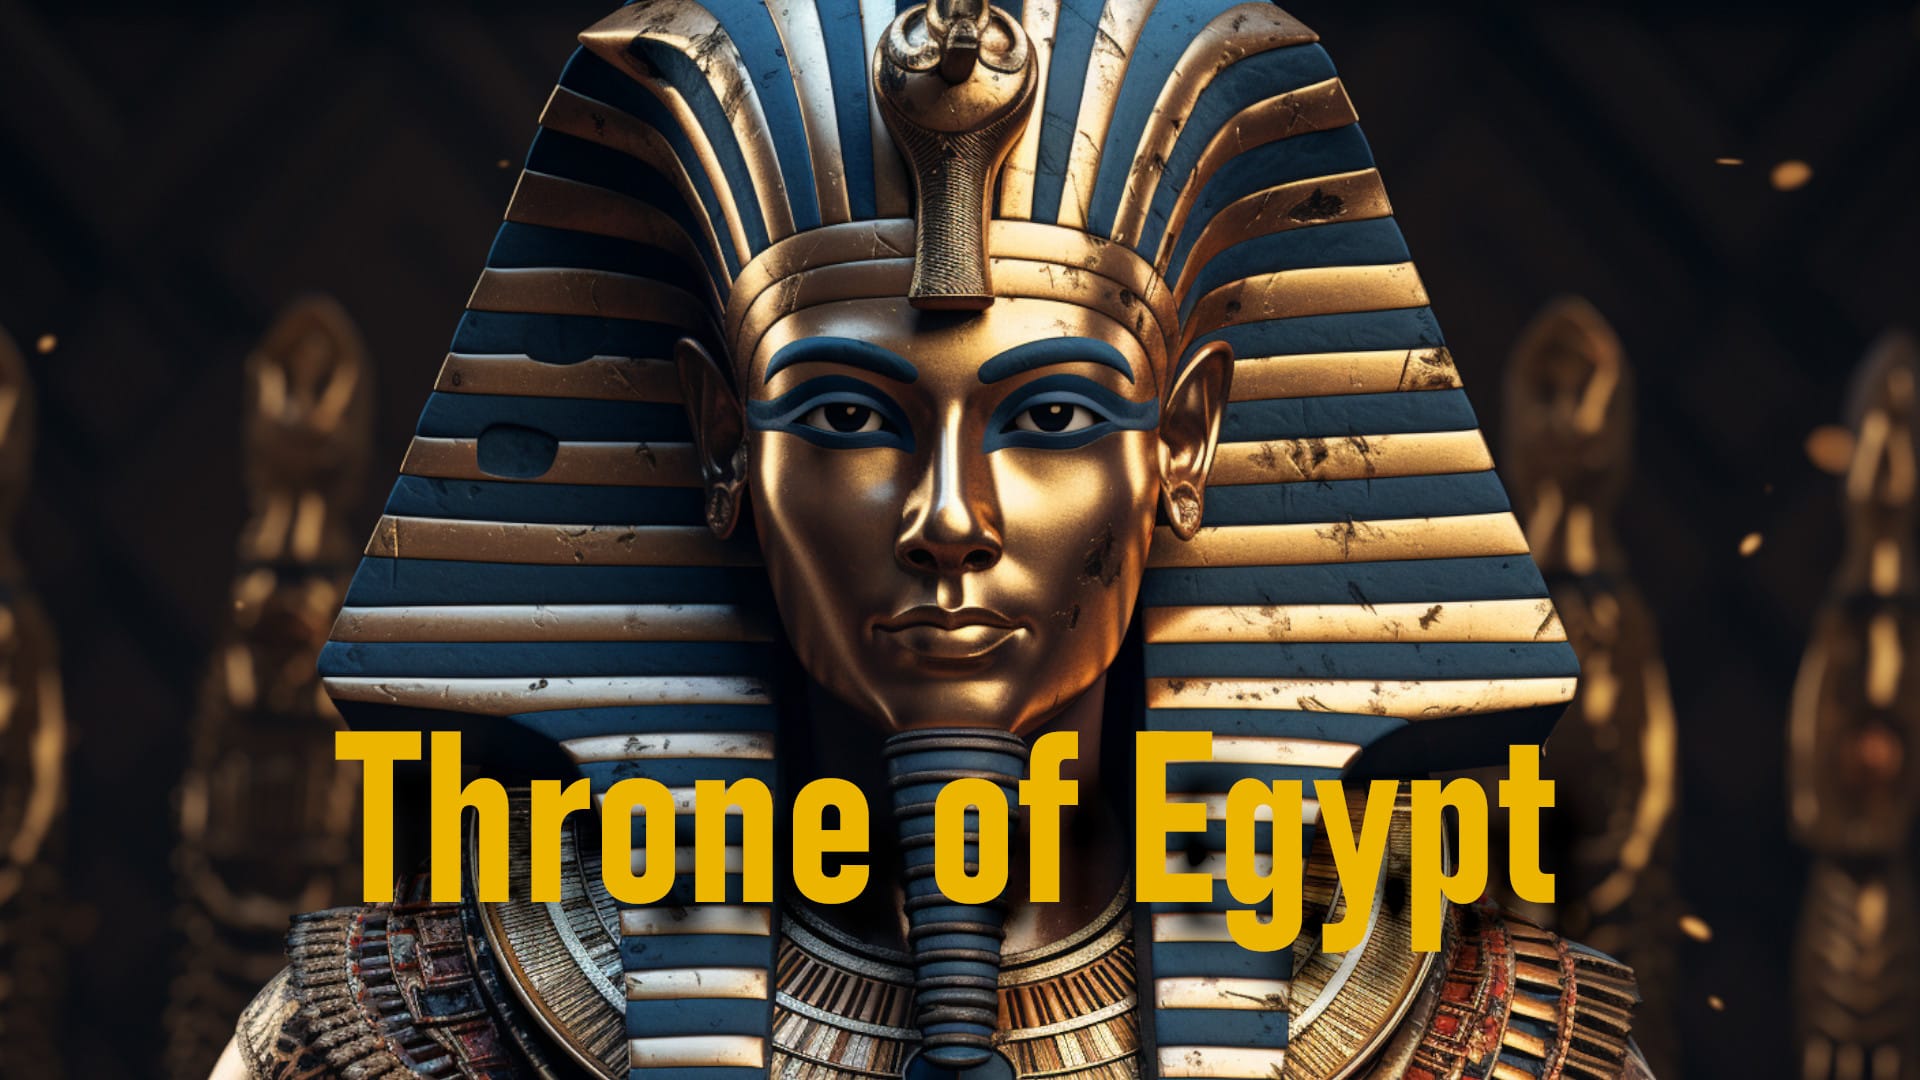 Throne of Egypt 1